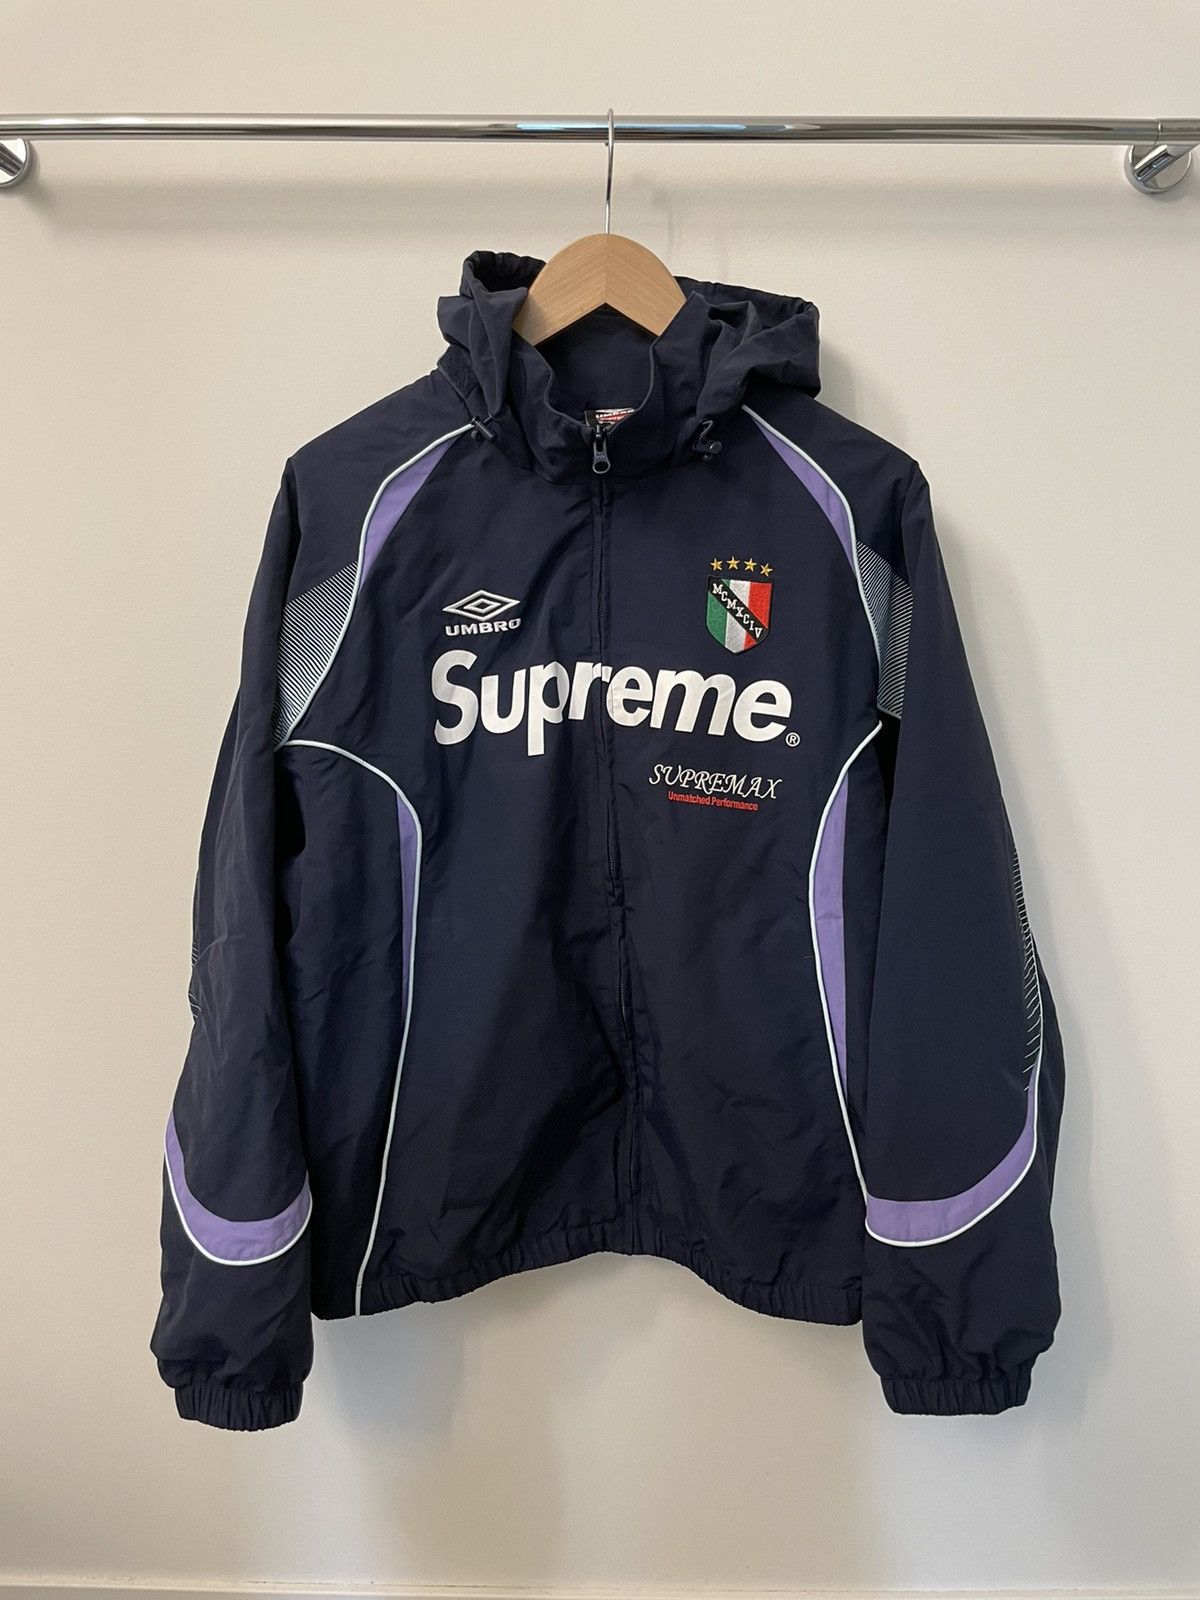 Supreme Supreme umbro track jacket | Grailed